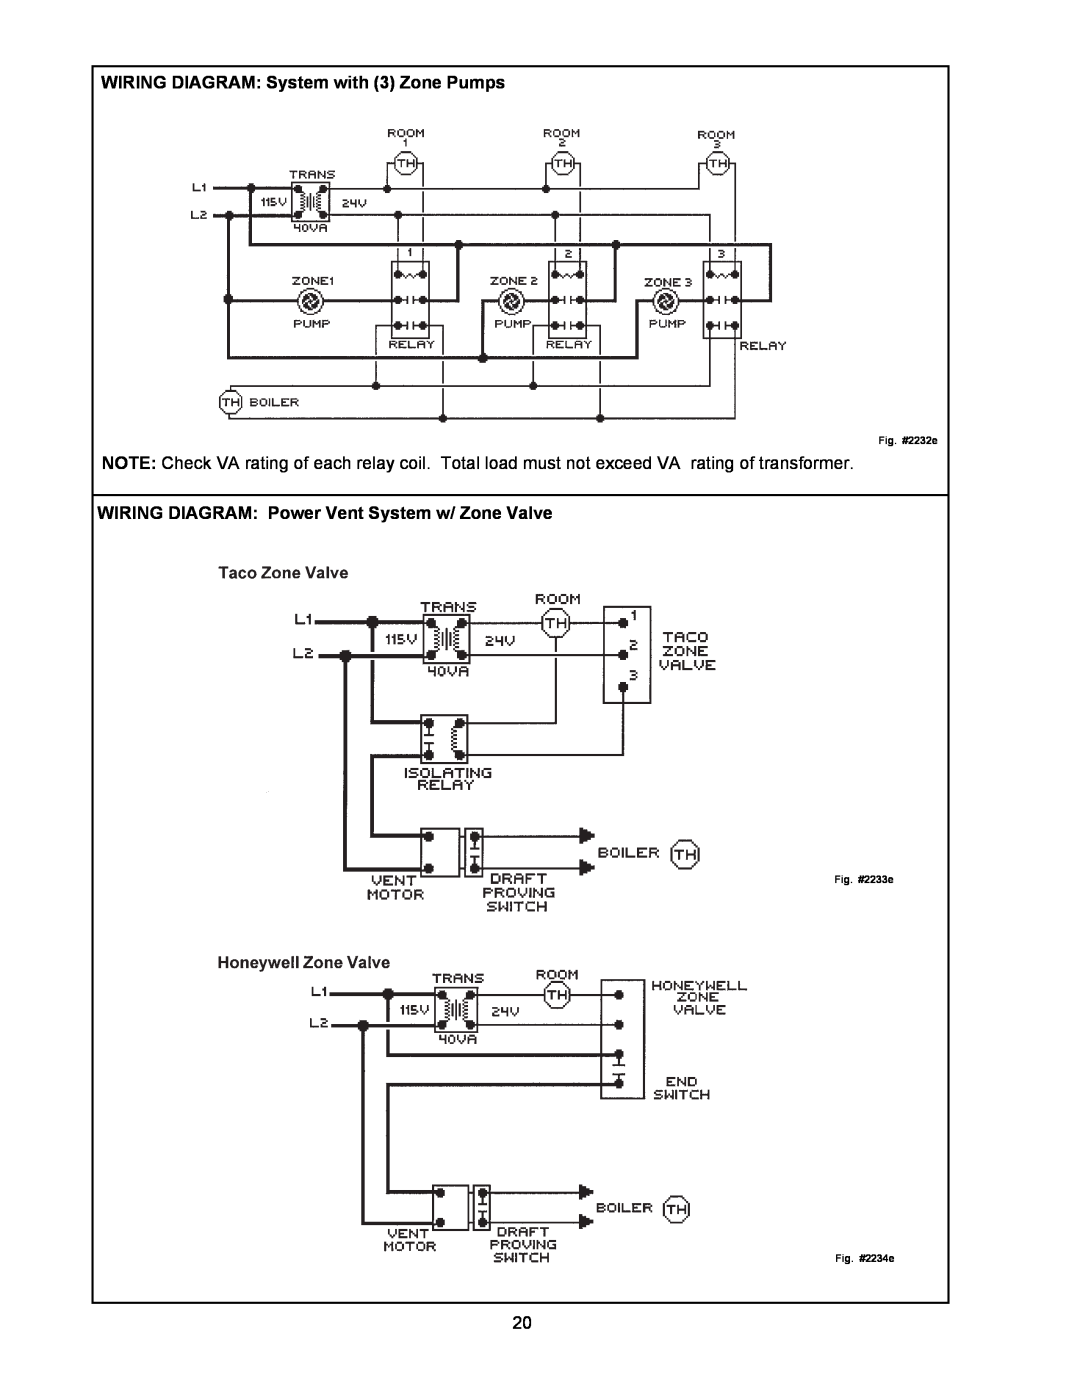 Raypak 0042B, 0066B WIRING DIAGRAM System with 3 Zone Pumps, WIRING DIAGRAM: Power Vent System w/ Zone Valve, Fig. #2232e 